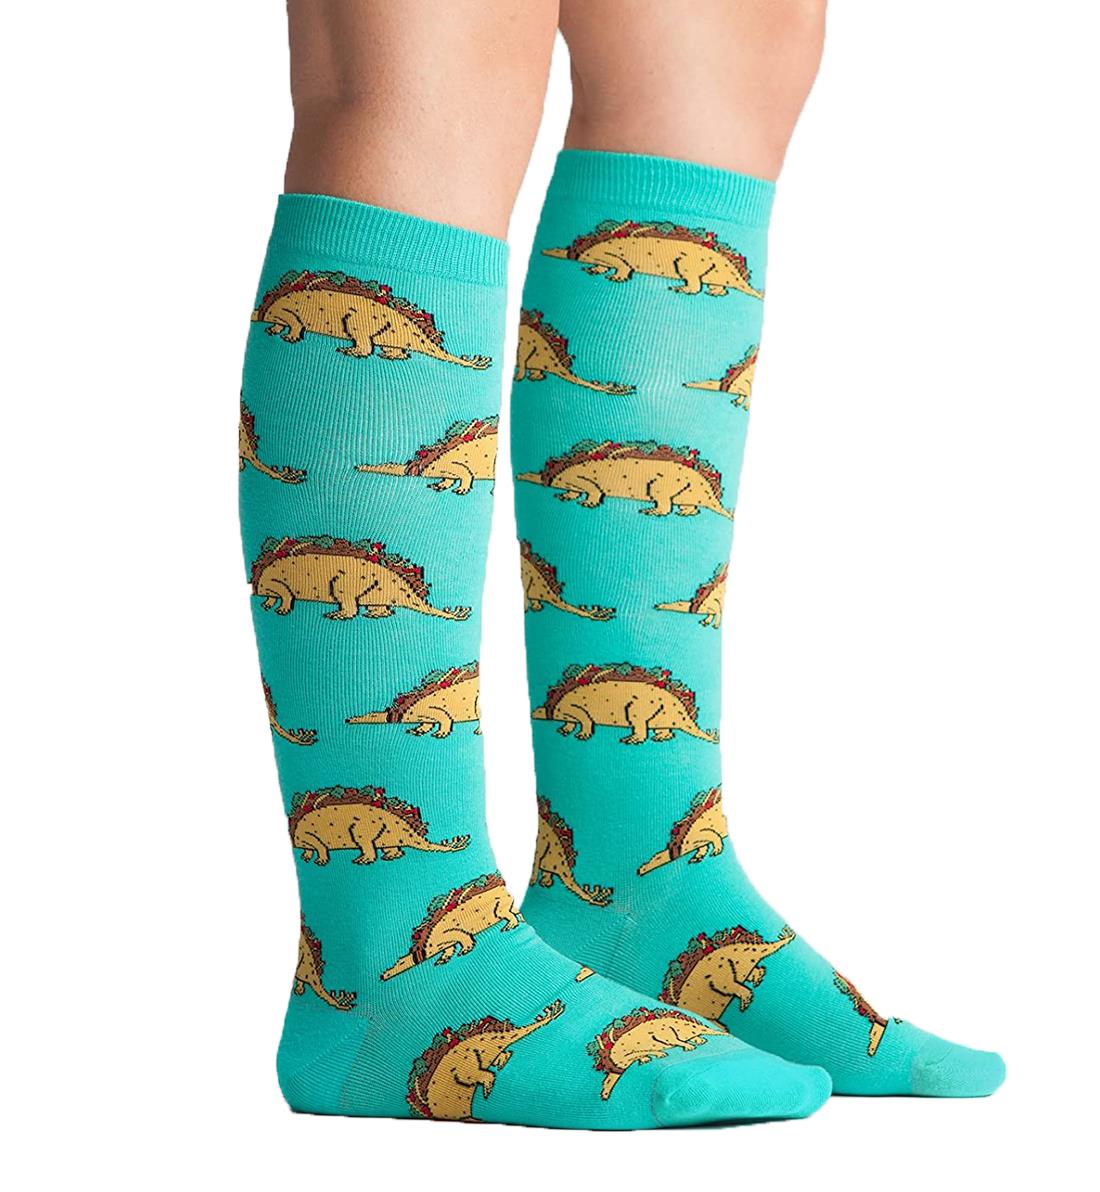 SOCK it to me Unisex Knee High Socks (f0254),Tacosaurus - Tacosaurus,One Size